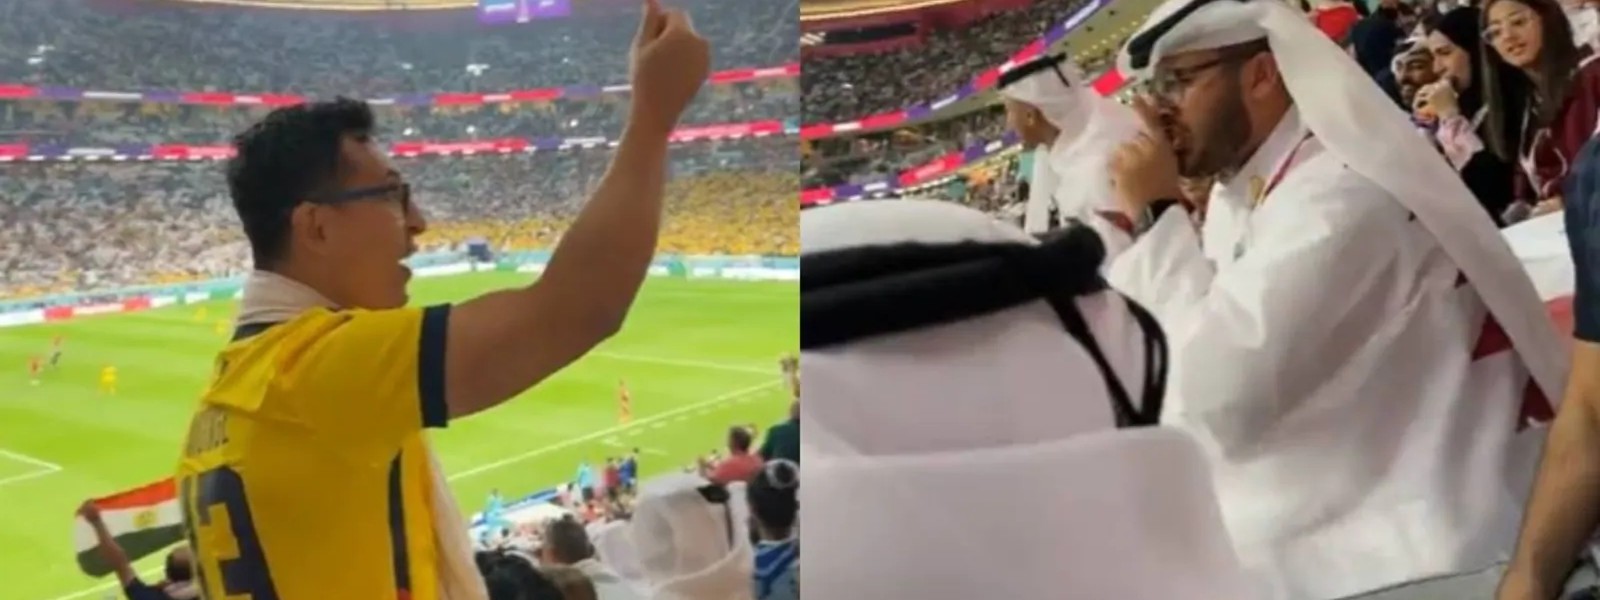 World Cup fans argue, then make up